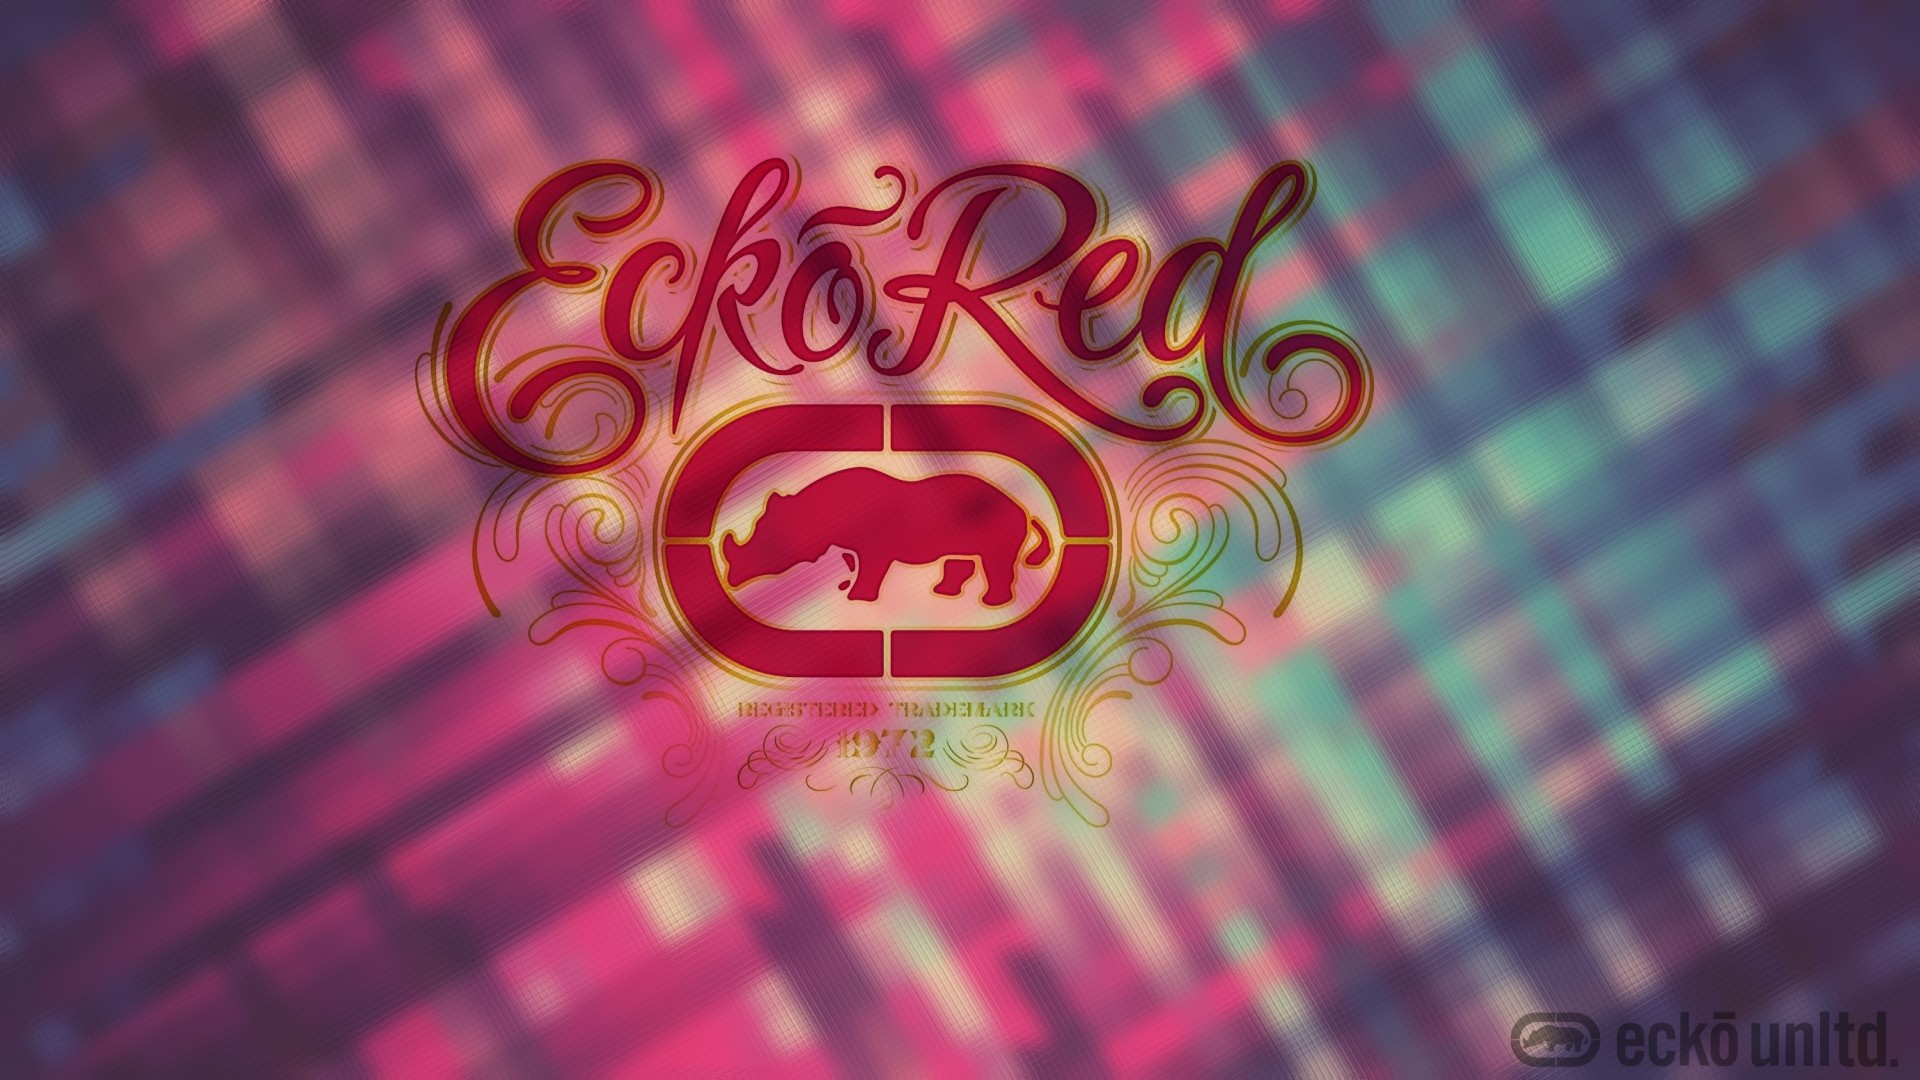 Ecko Digital Art Typography 1920x1080